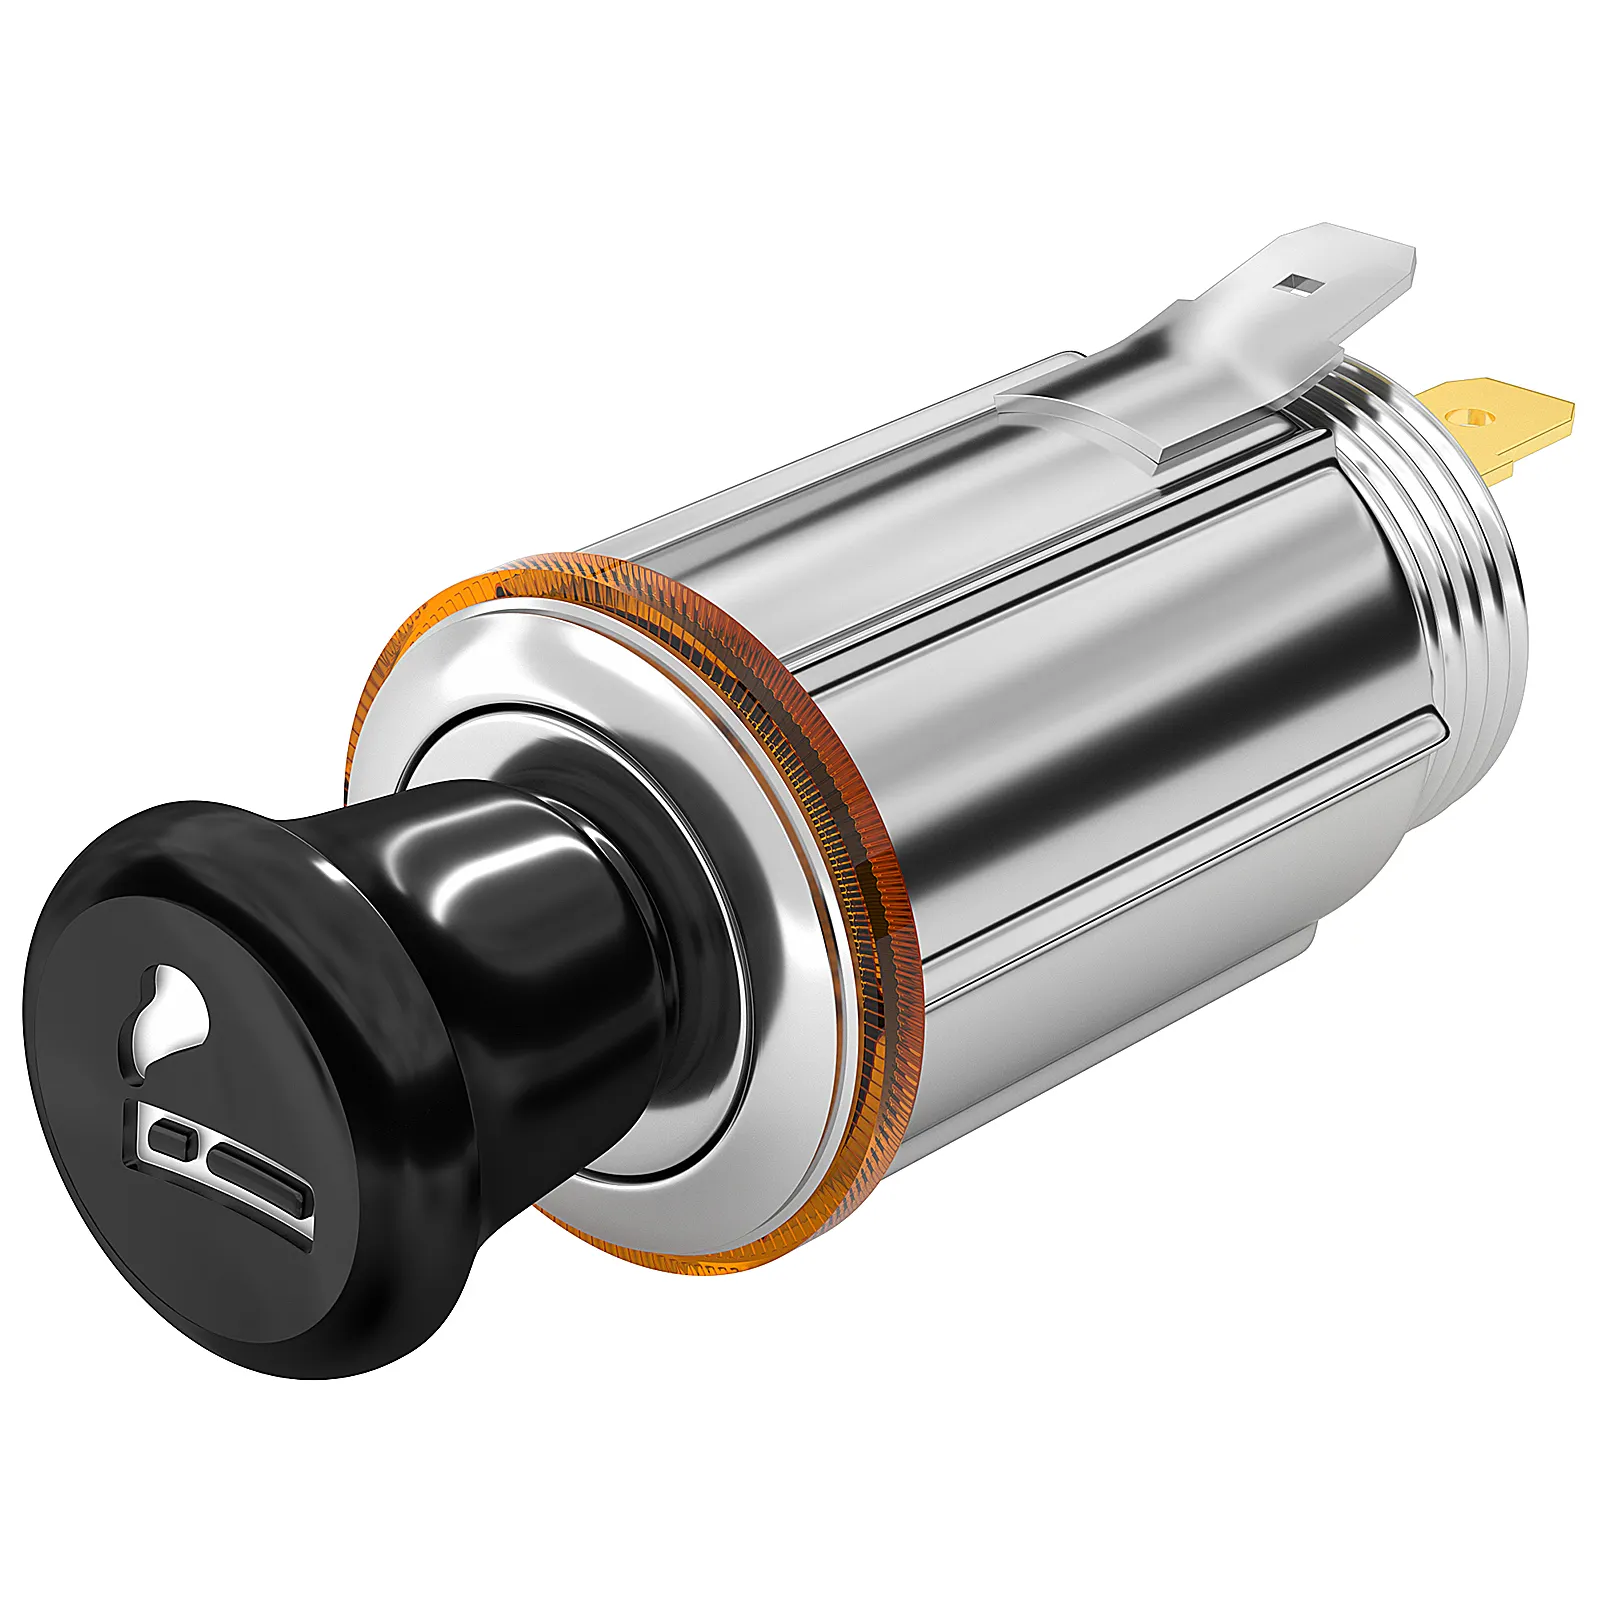 Daiertek DR-07 Car Cigarette Lighter Plug 12V Socket With LED Ring Eject Button Replacement Accessory For Automotive Car Golf